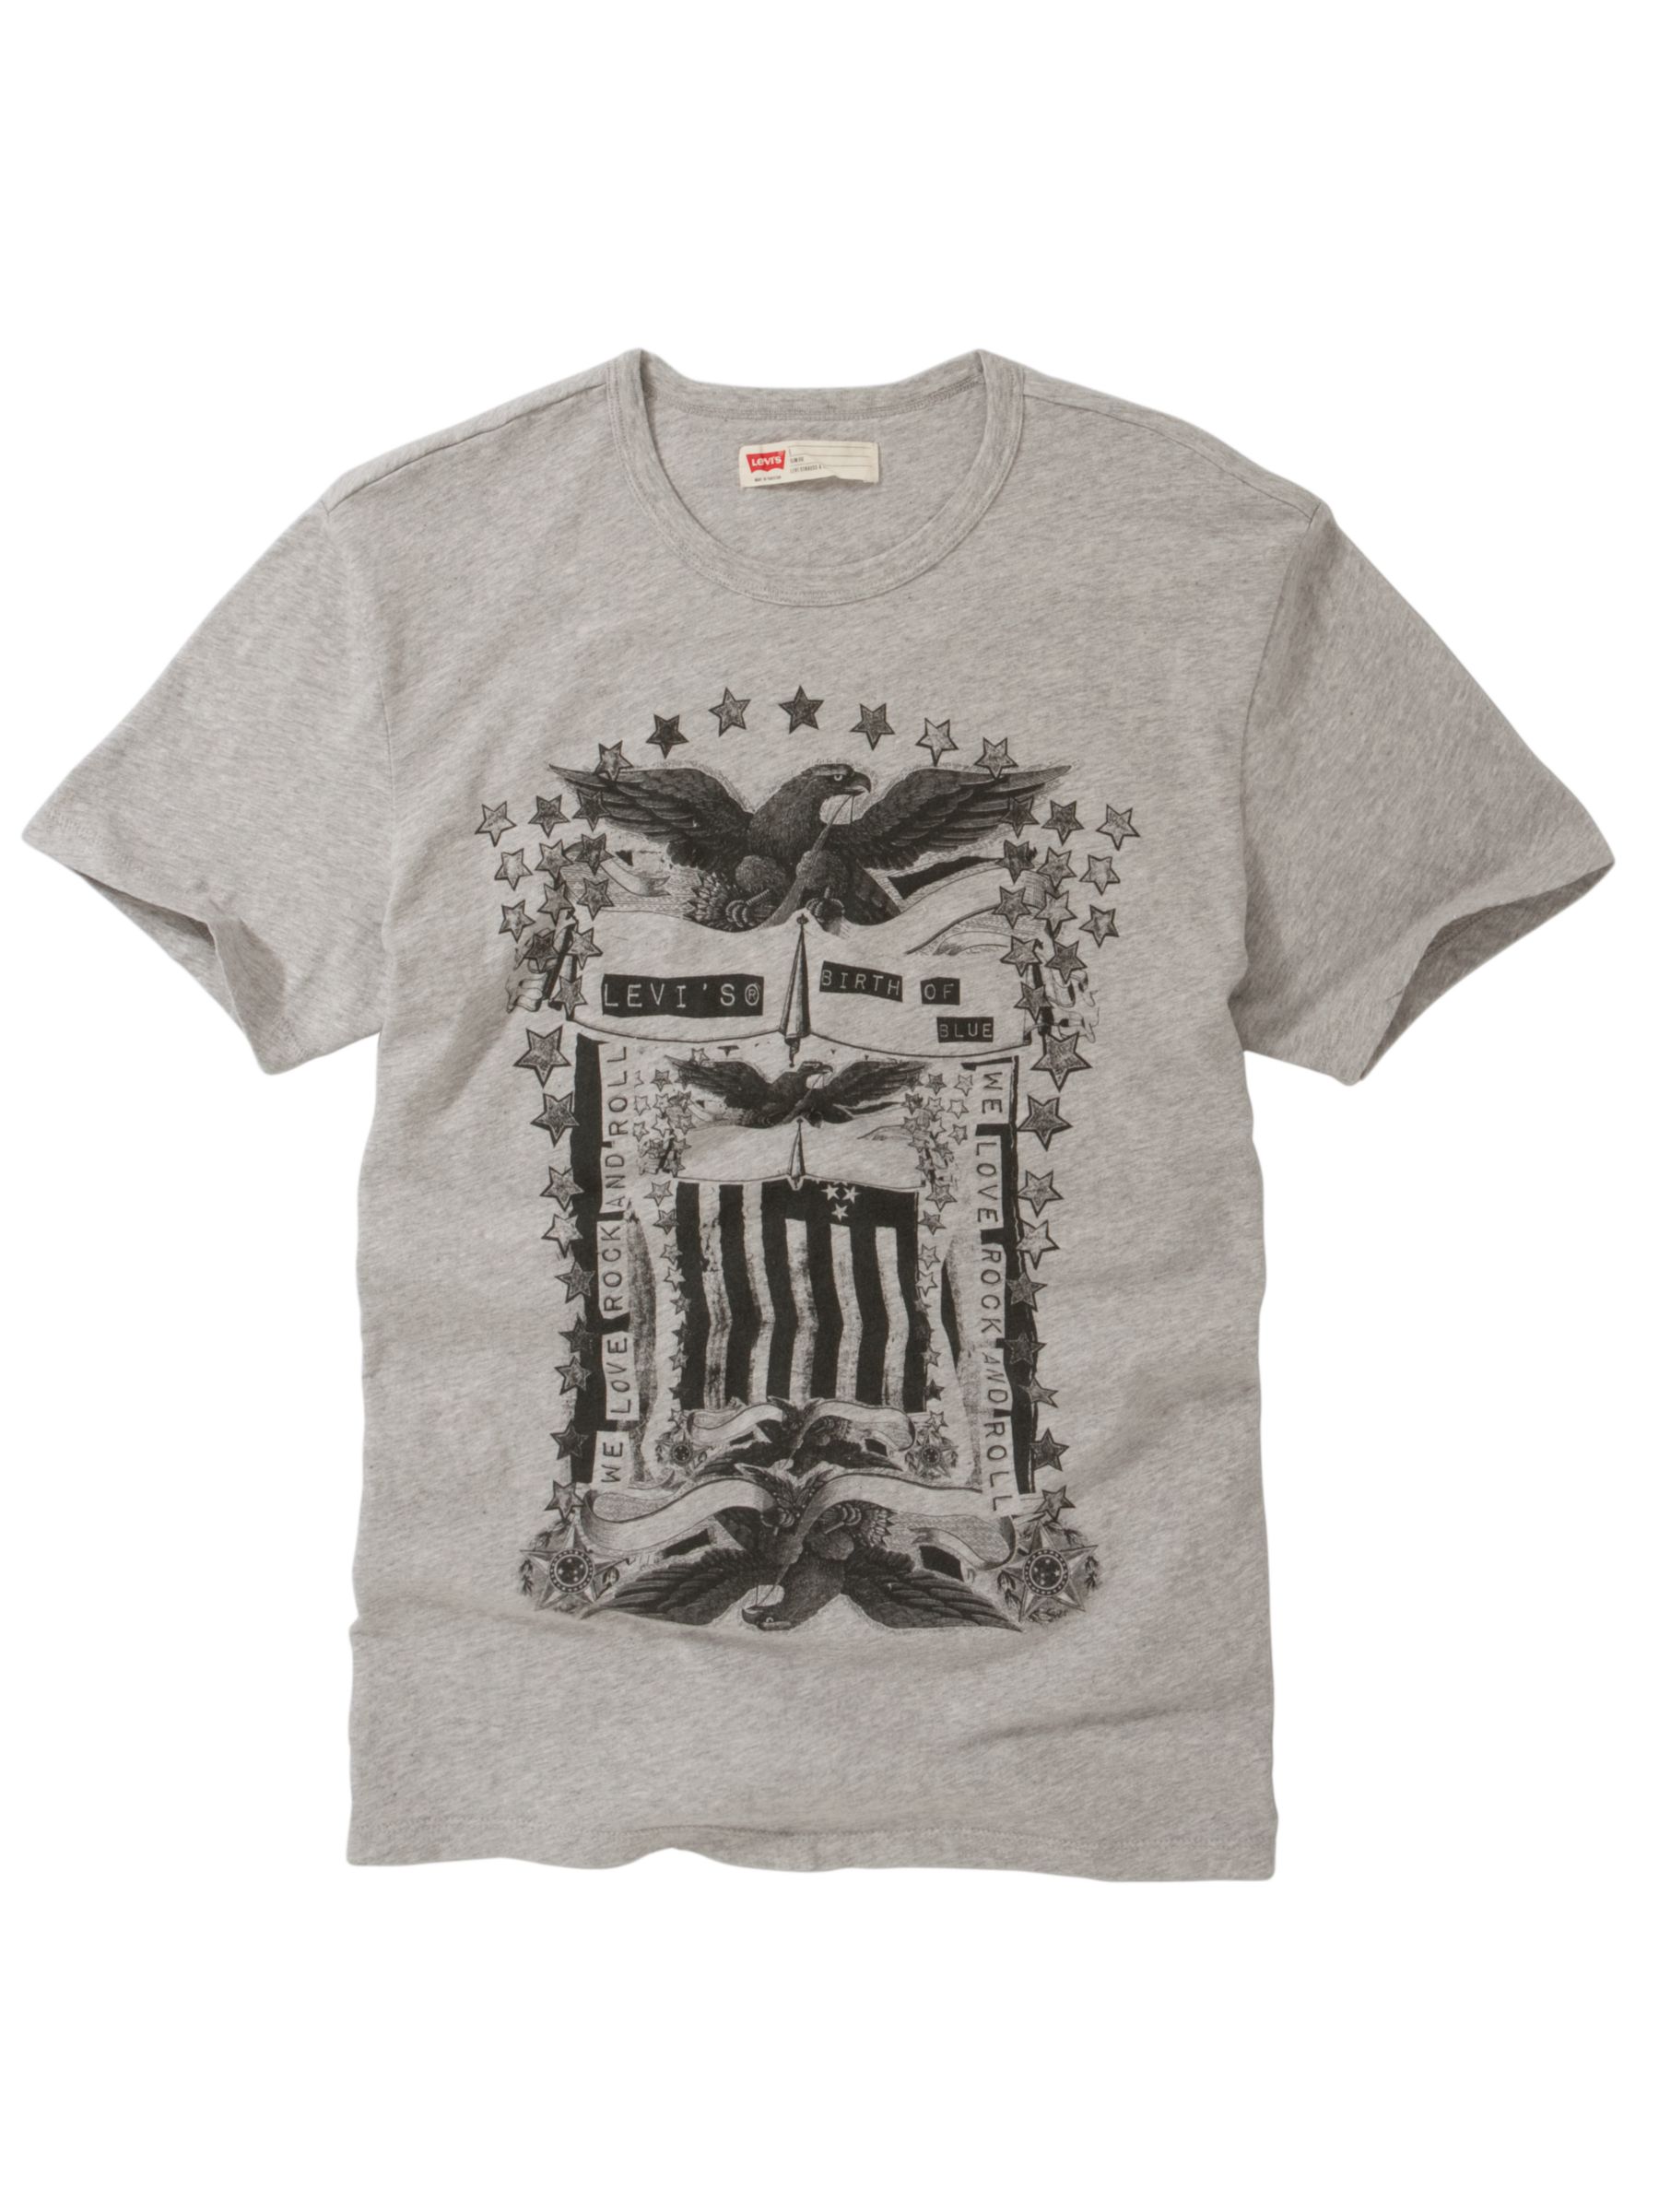 Eagle Rock Print T-Shirt, Mid Marl